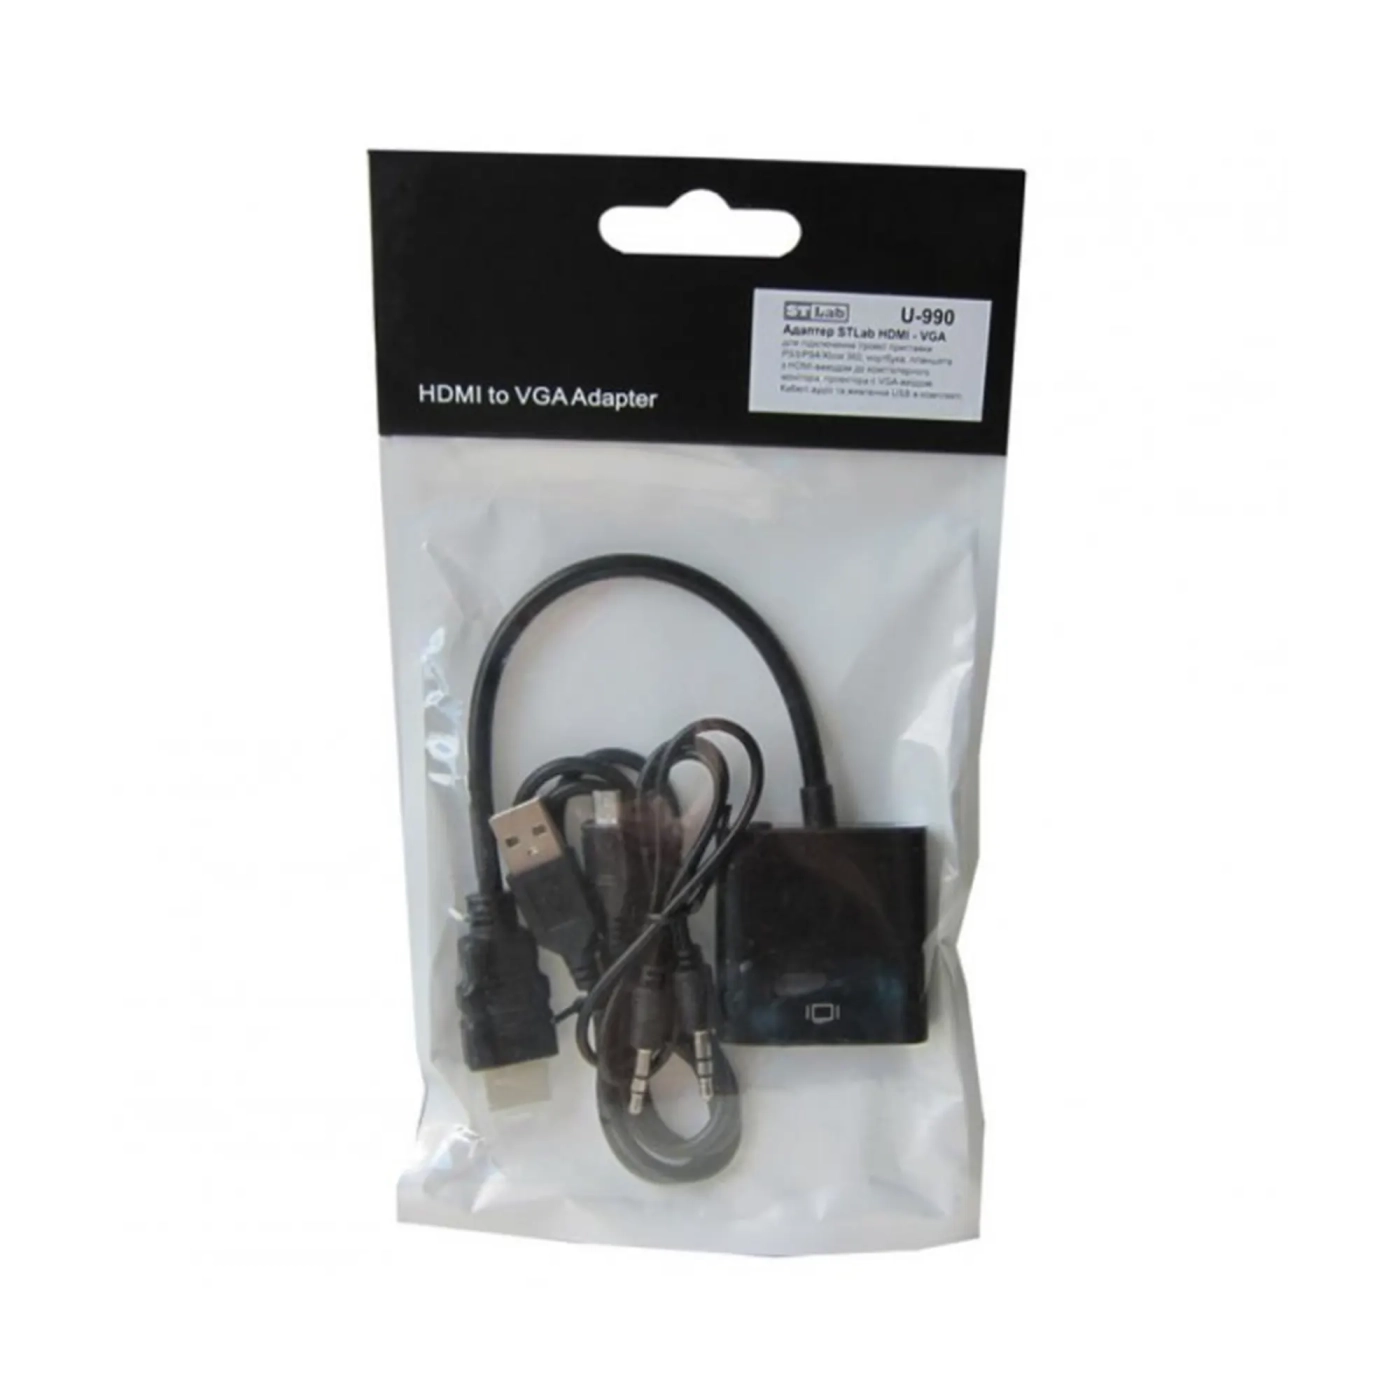 Купить Адаптер ST-Lab HDMI male to VGA F (U-990) - фото 4